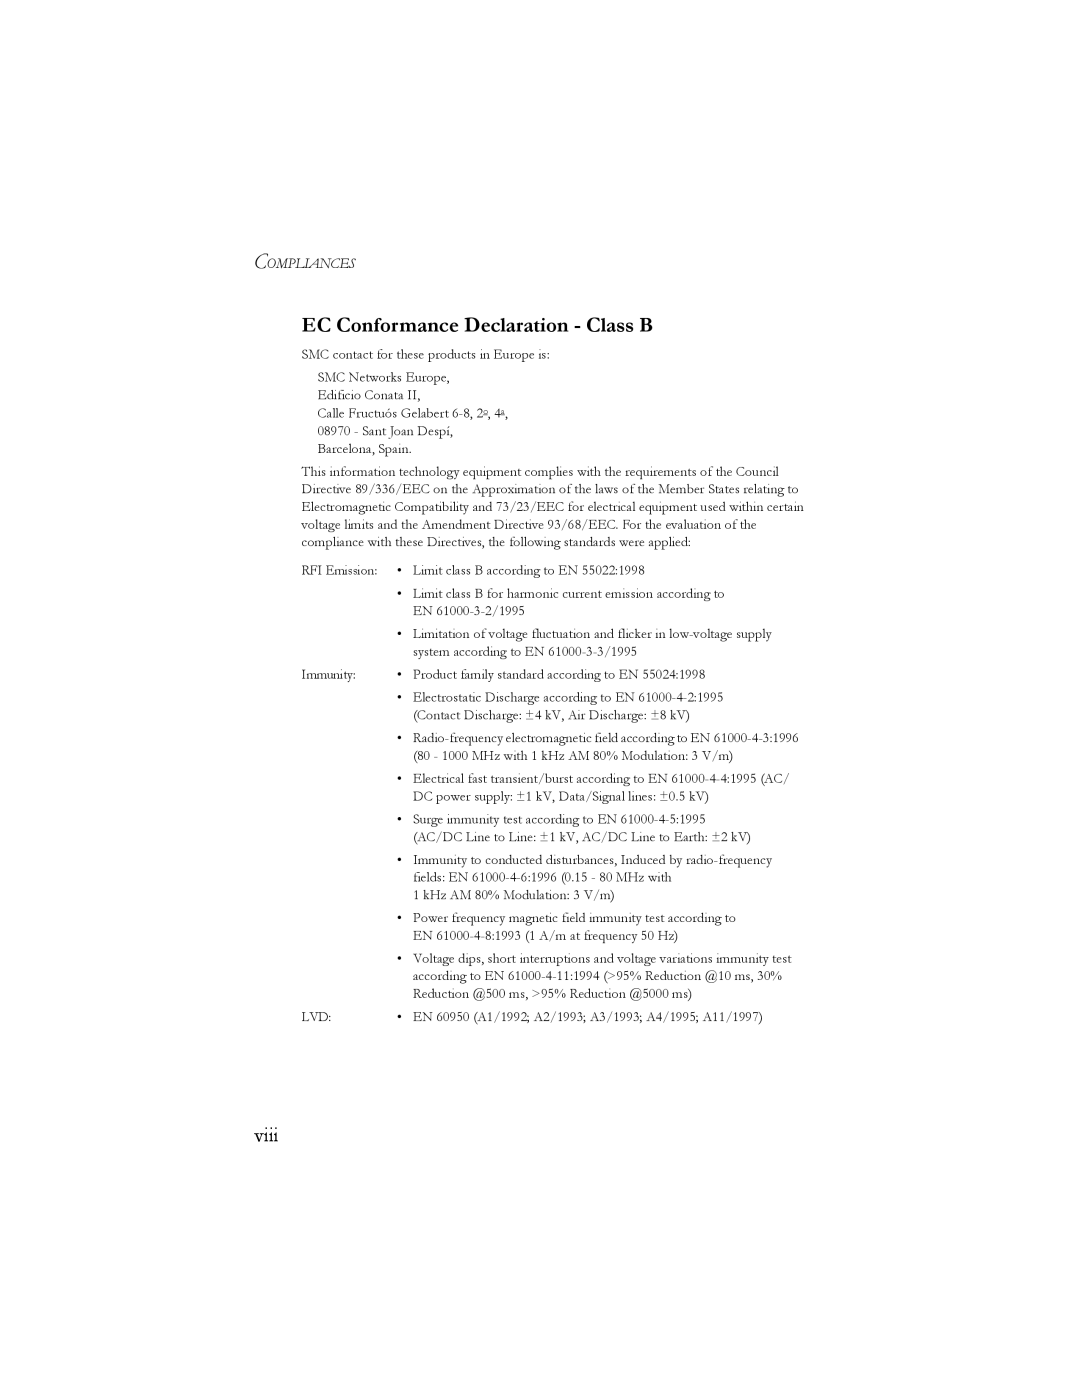 SMC Networks SMC2664W manual EC Conformance Declaration - Class B, viii, Compliances 